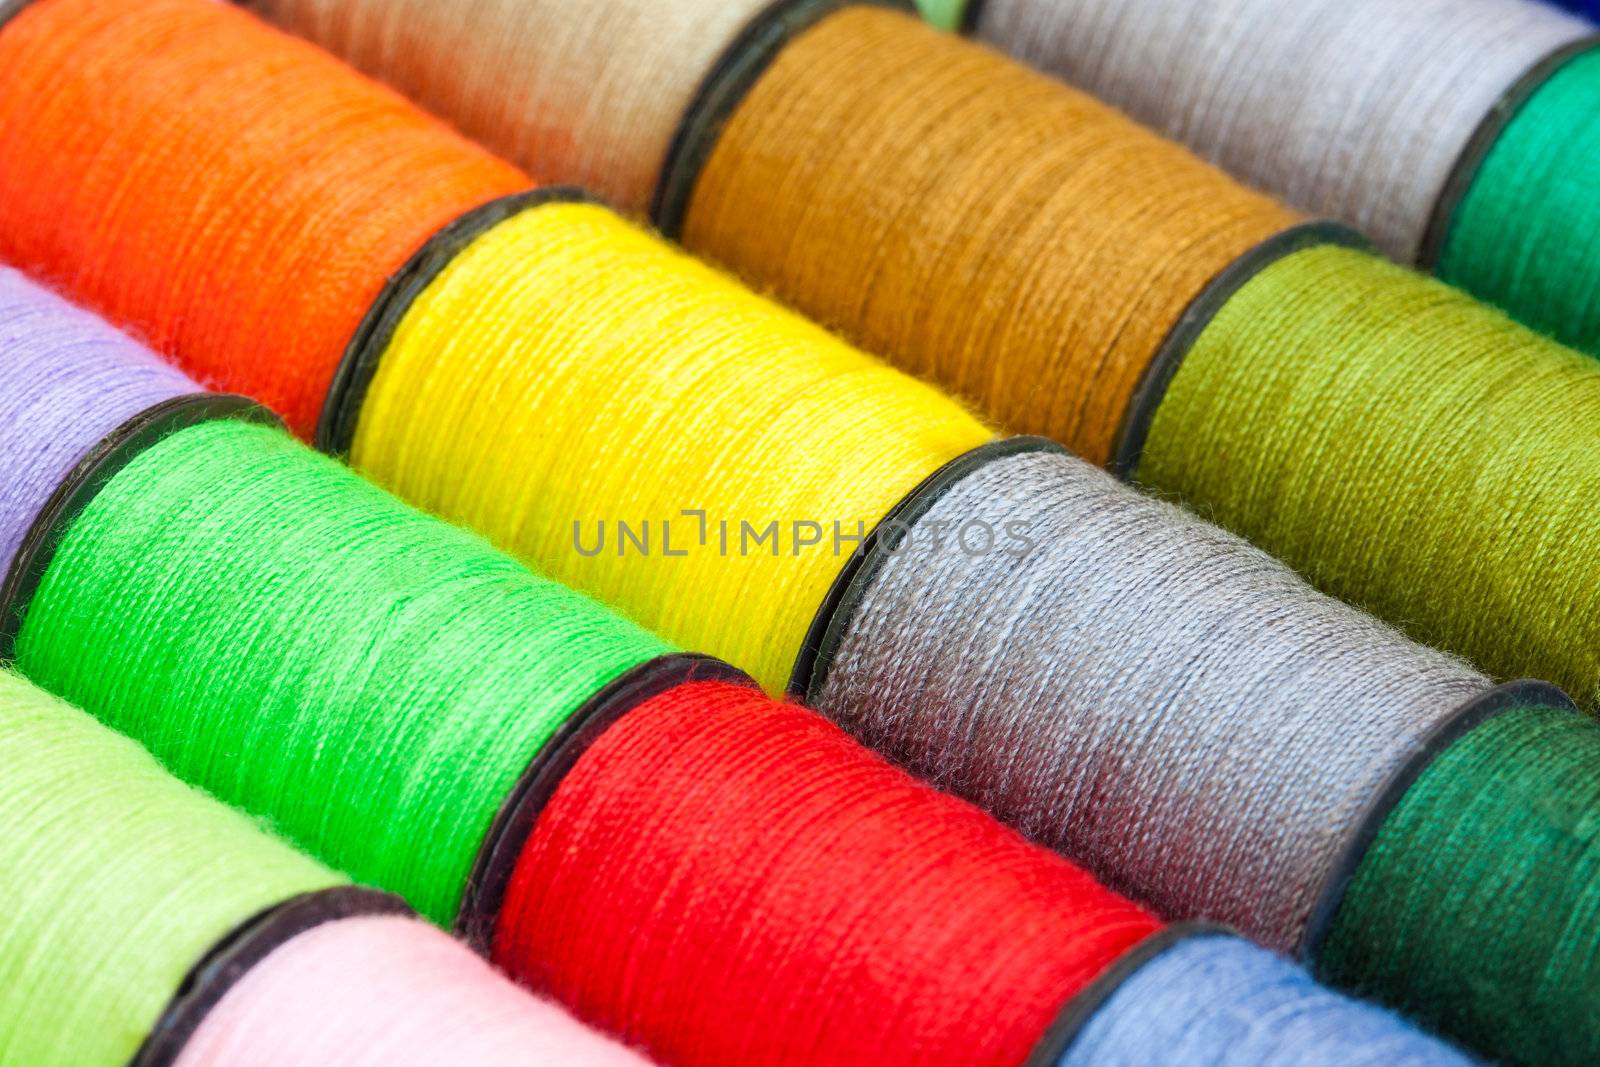 Colorful spools of thread by Jaykayl